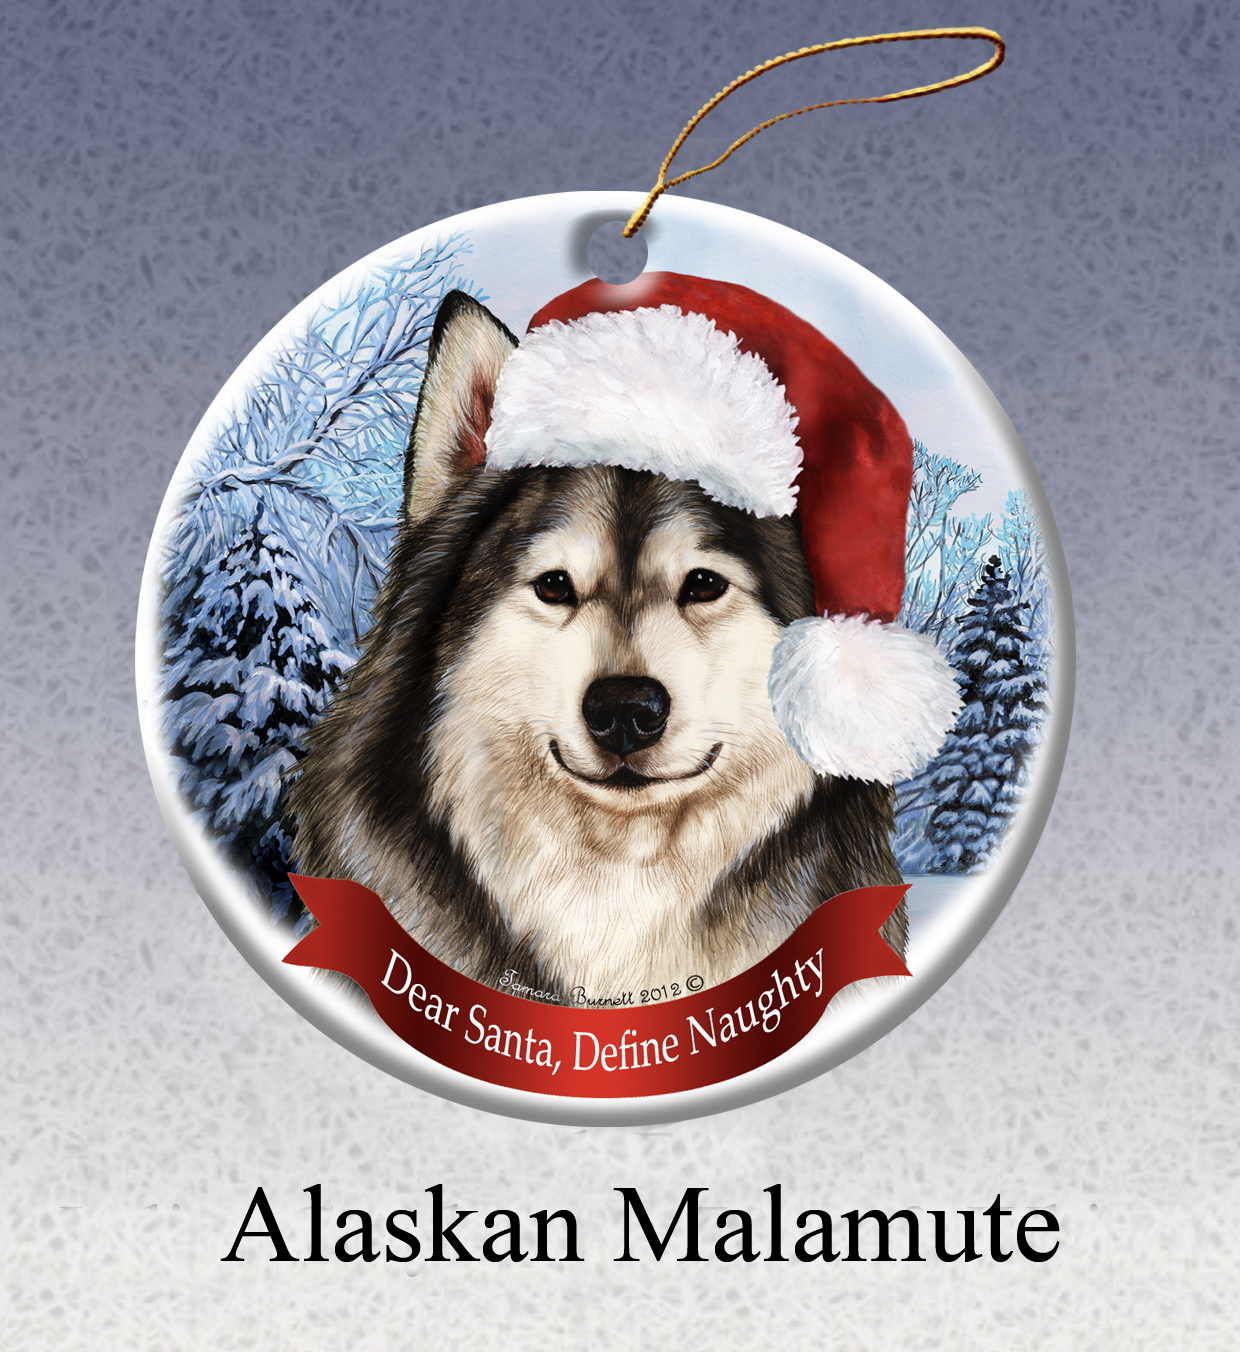 Alaskan Malamute - Howliday Ornament image sized 1240 x 1352